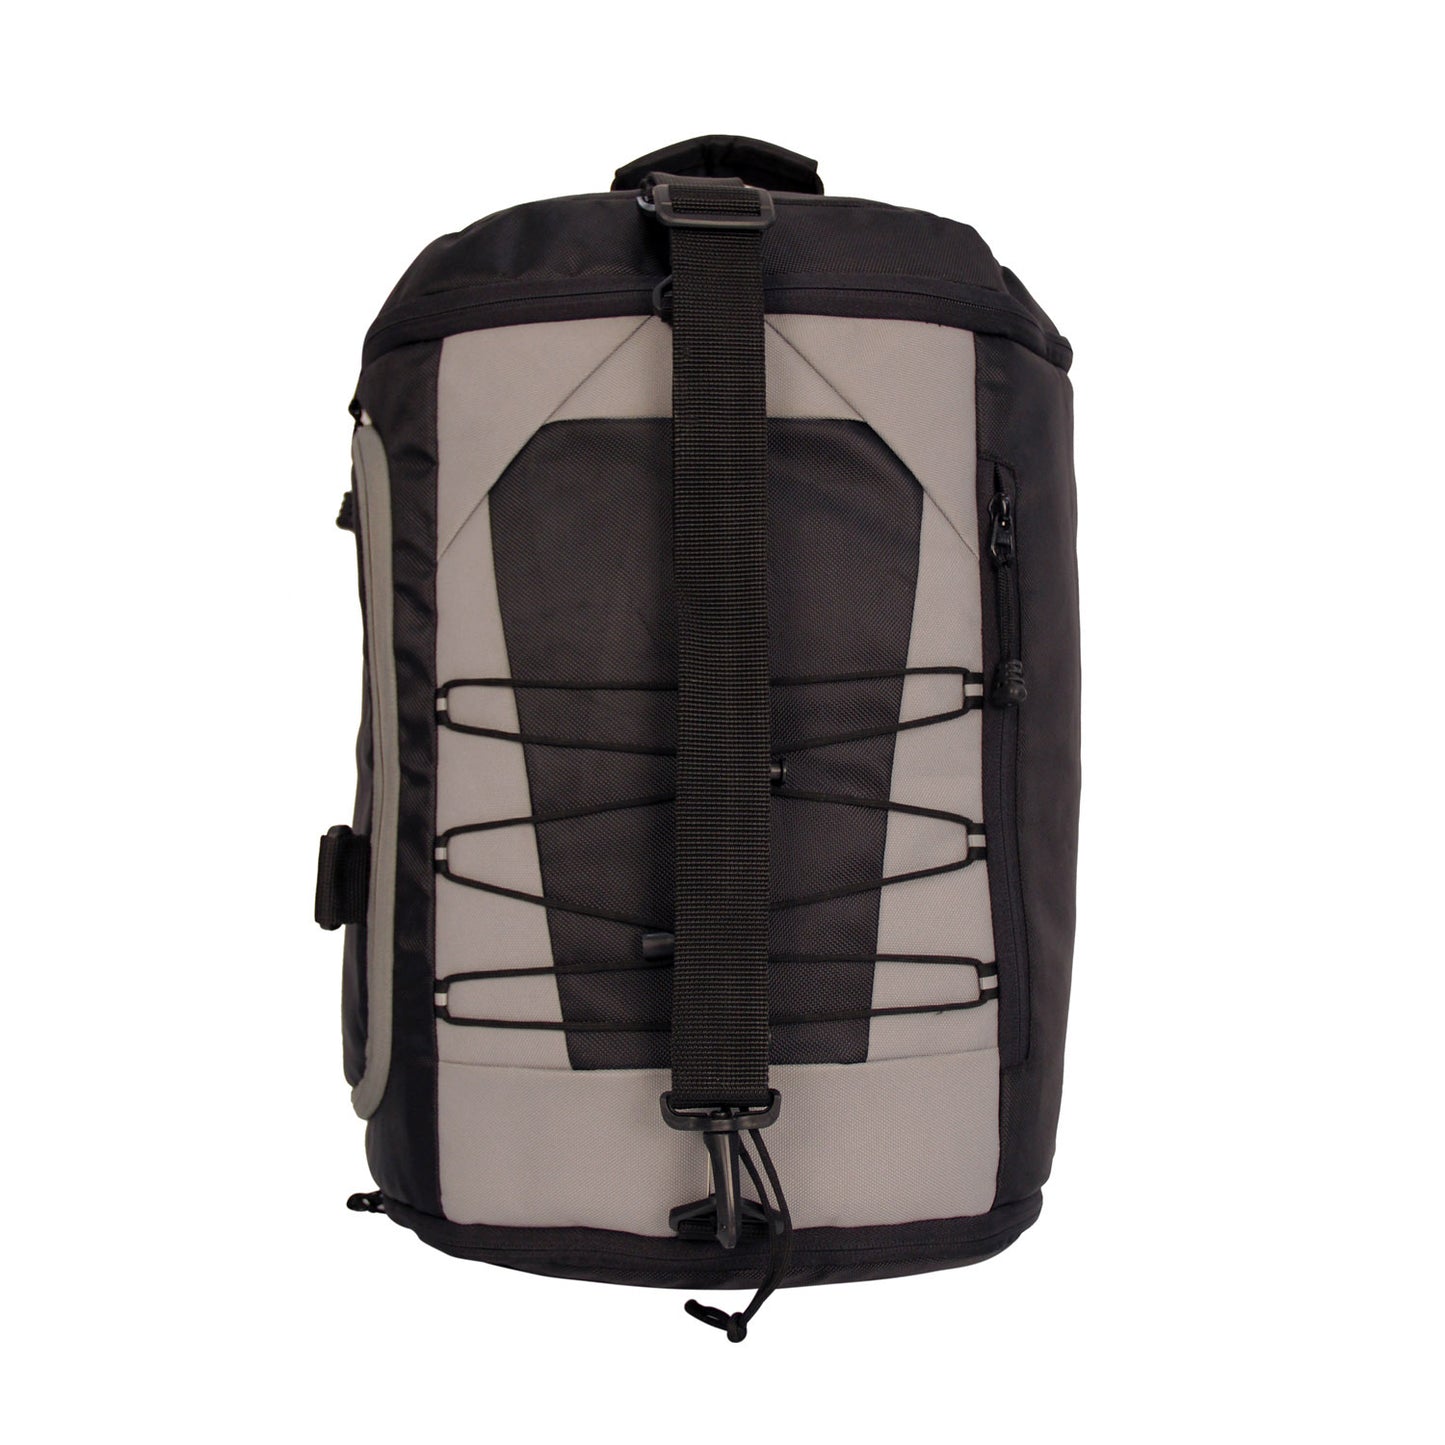 Multipurpose Backpack